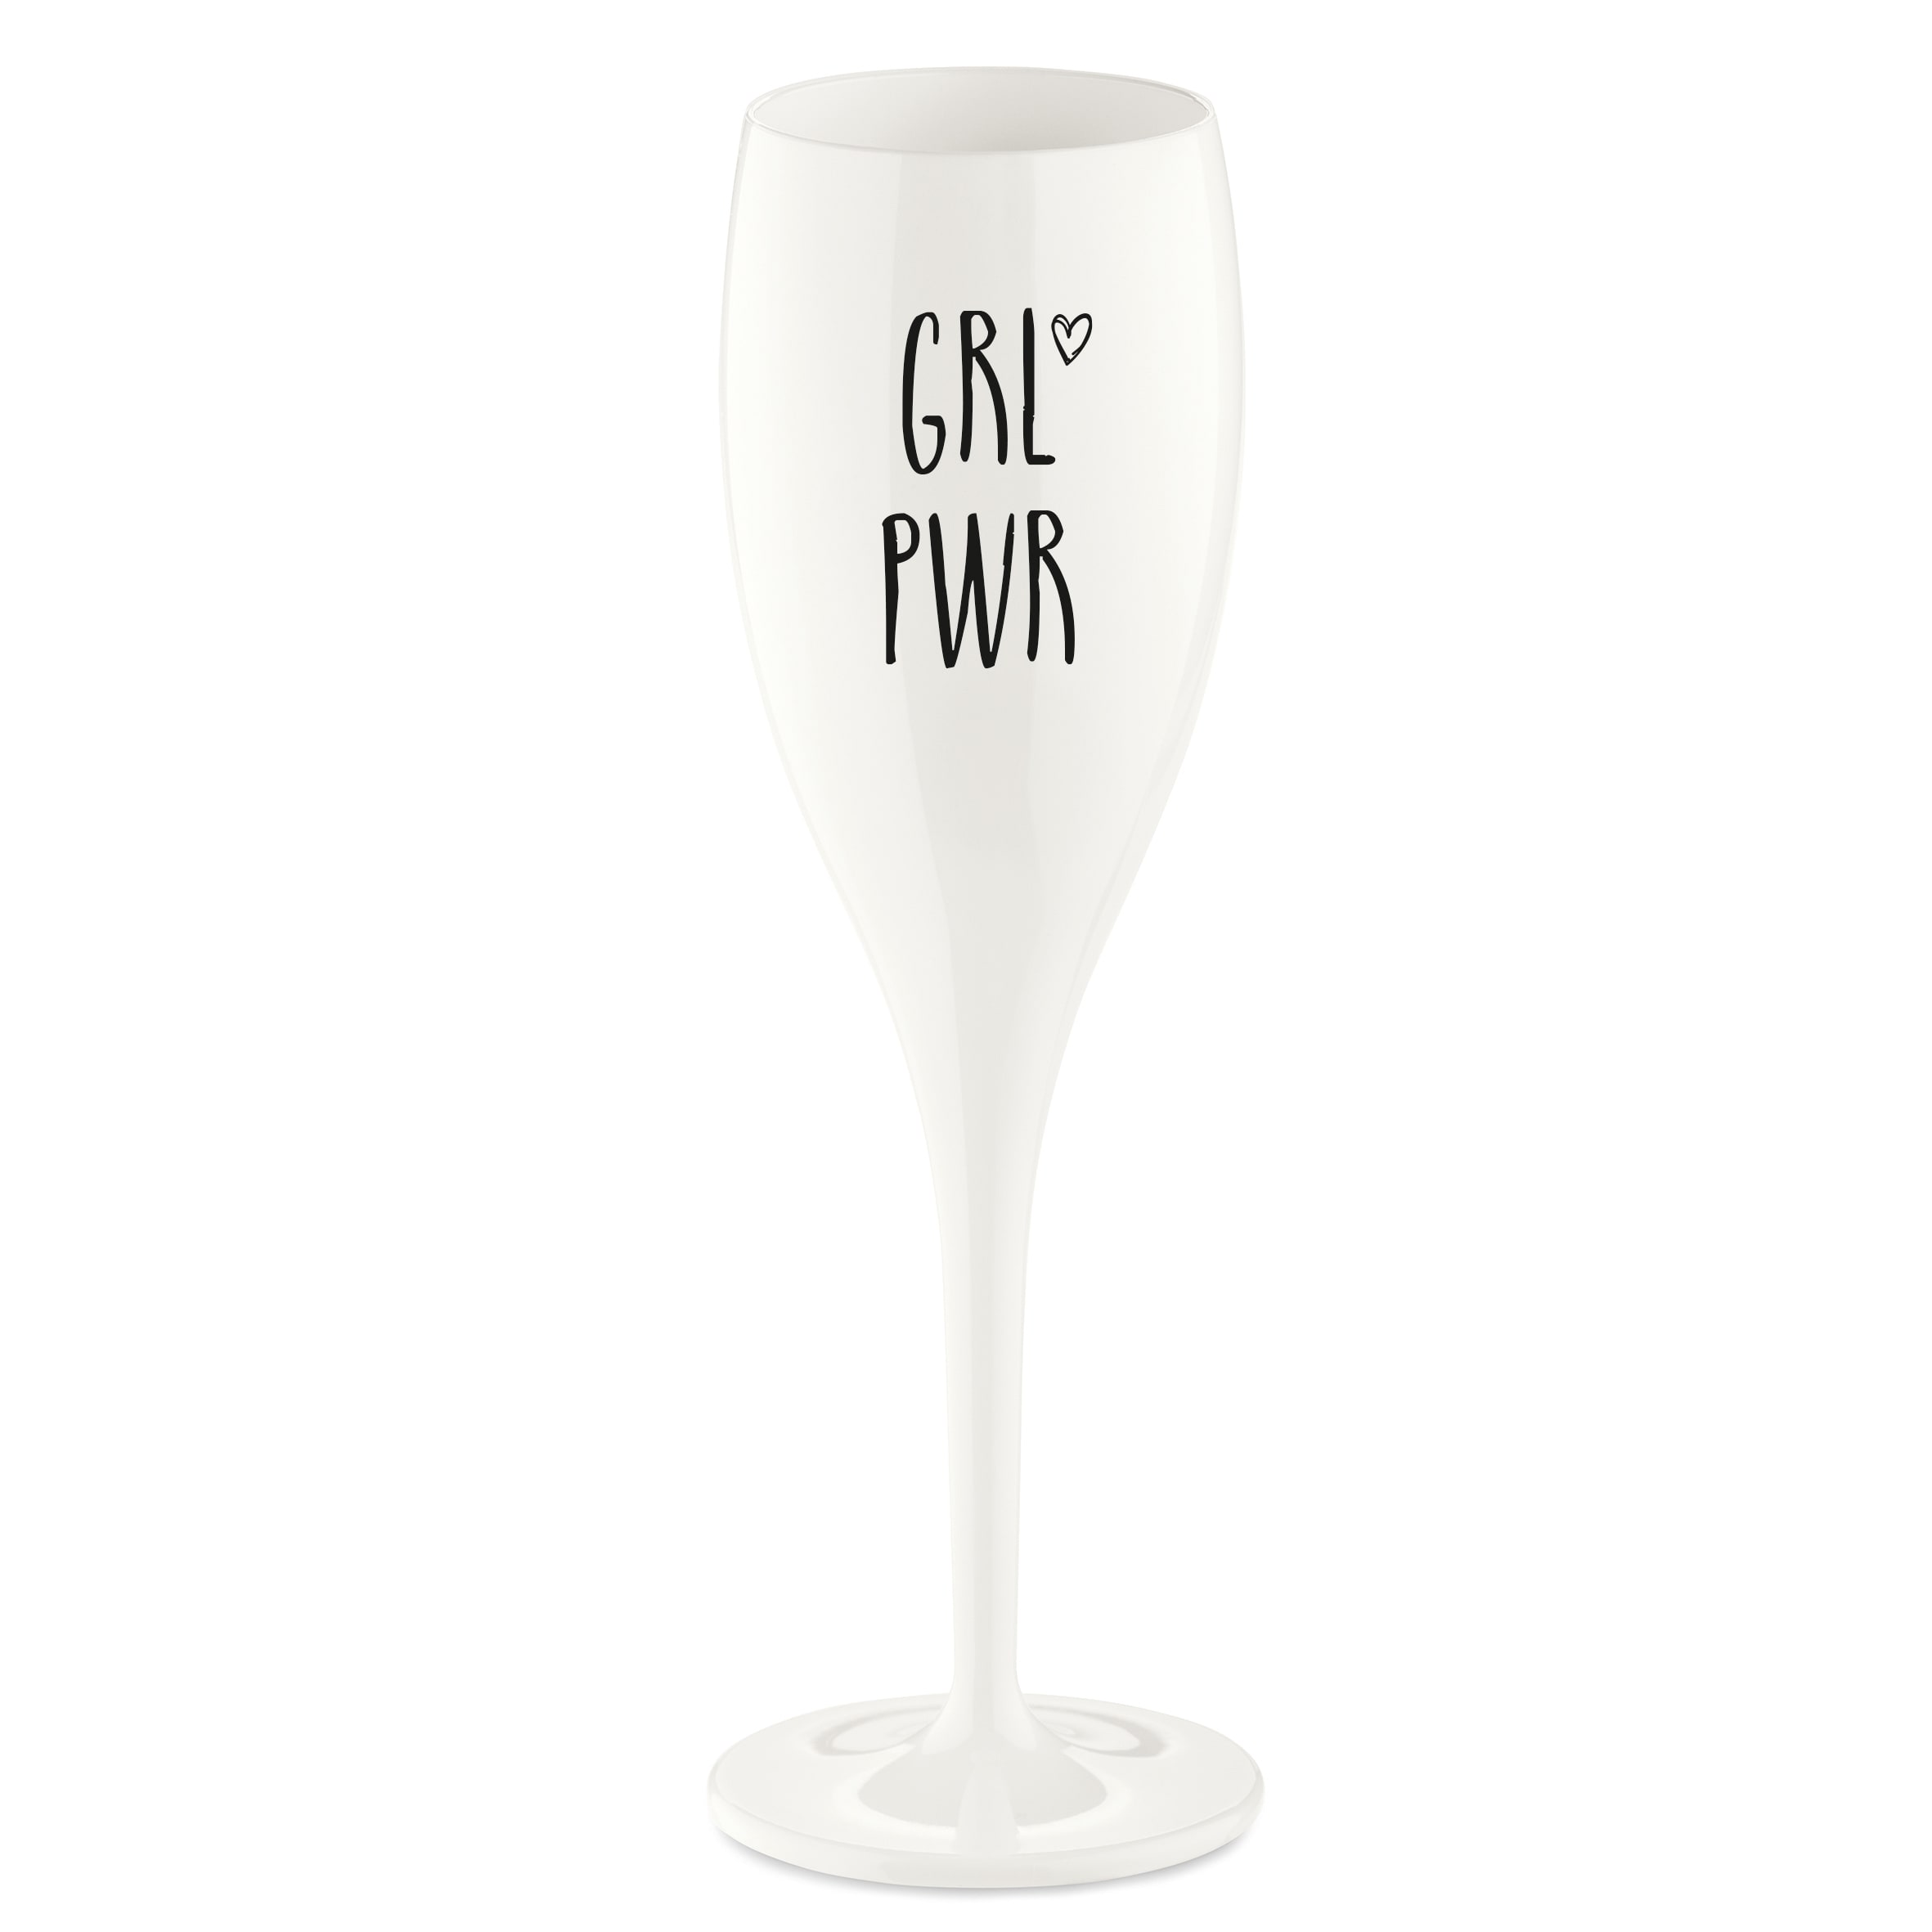 Champagneglas Med Print 6-pack Grl Pwr från Koziol